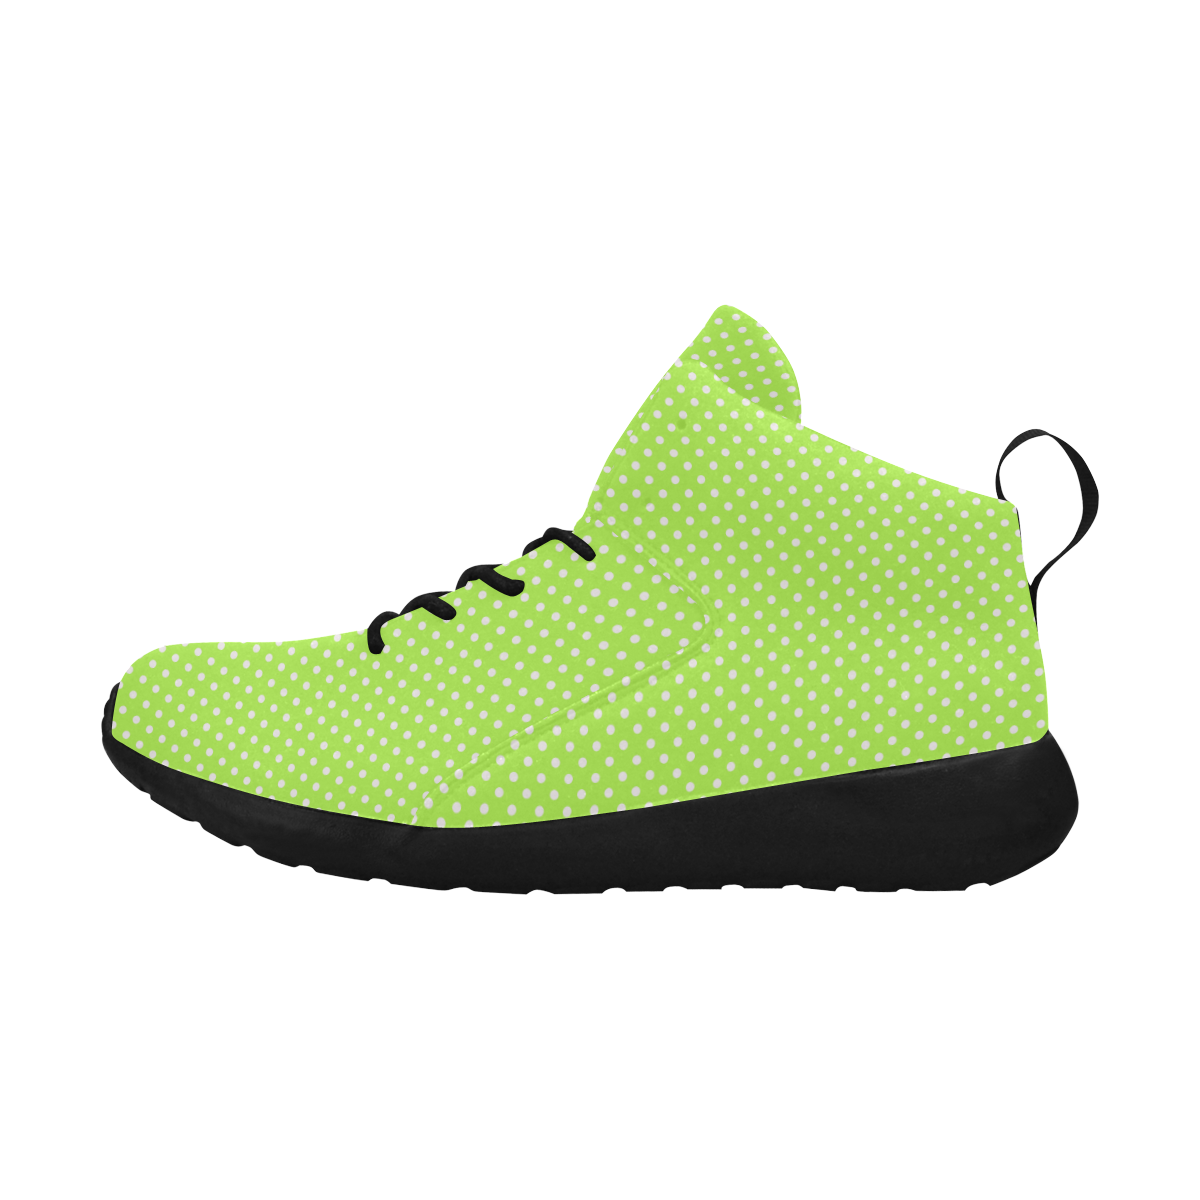 Mint green polka dots Women's Chukka Training Shoes/Large Size (Model 57502)